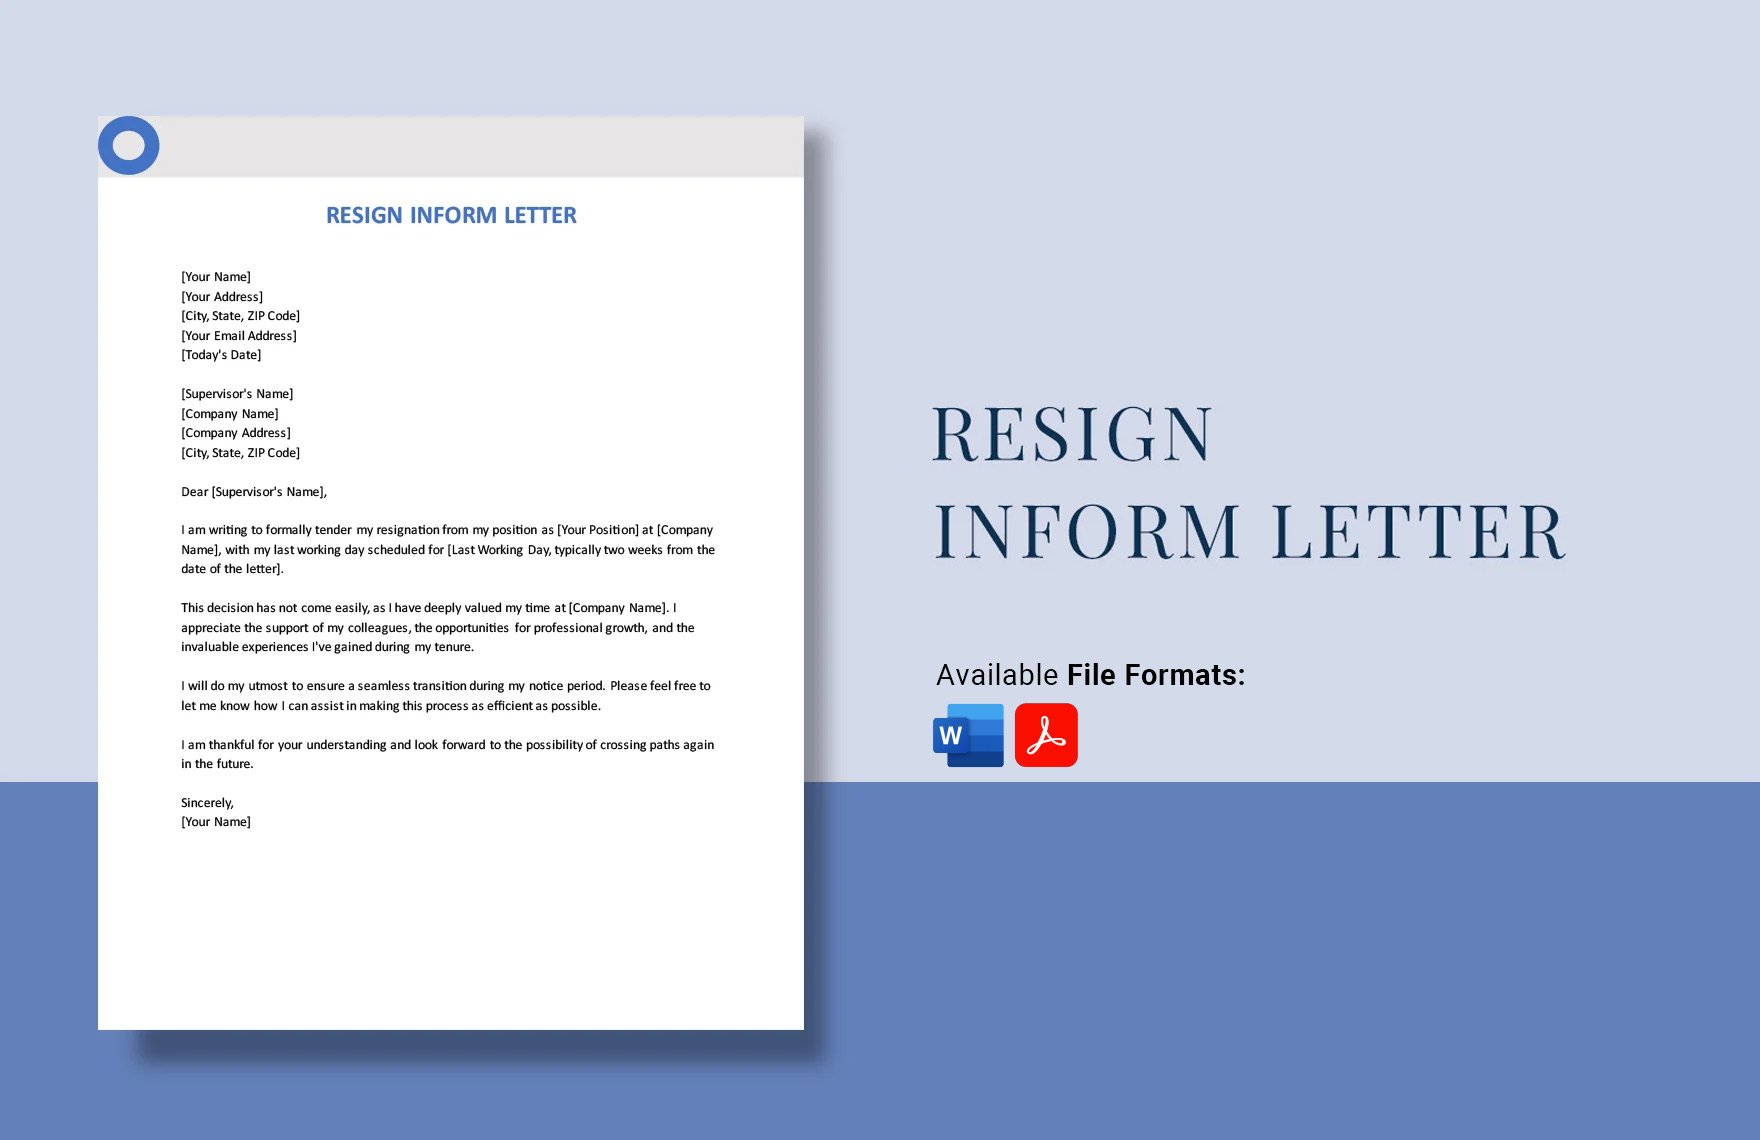 Resign Inform Letter in Word, PDF